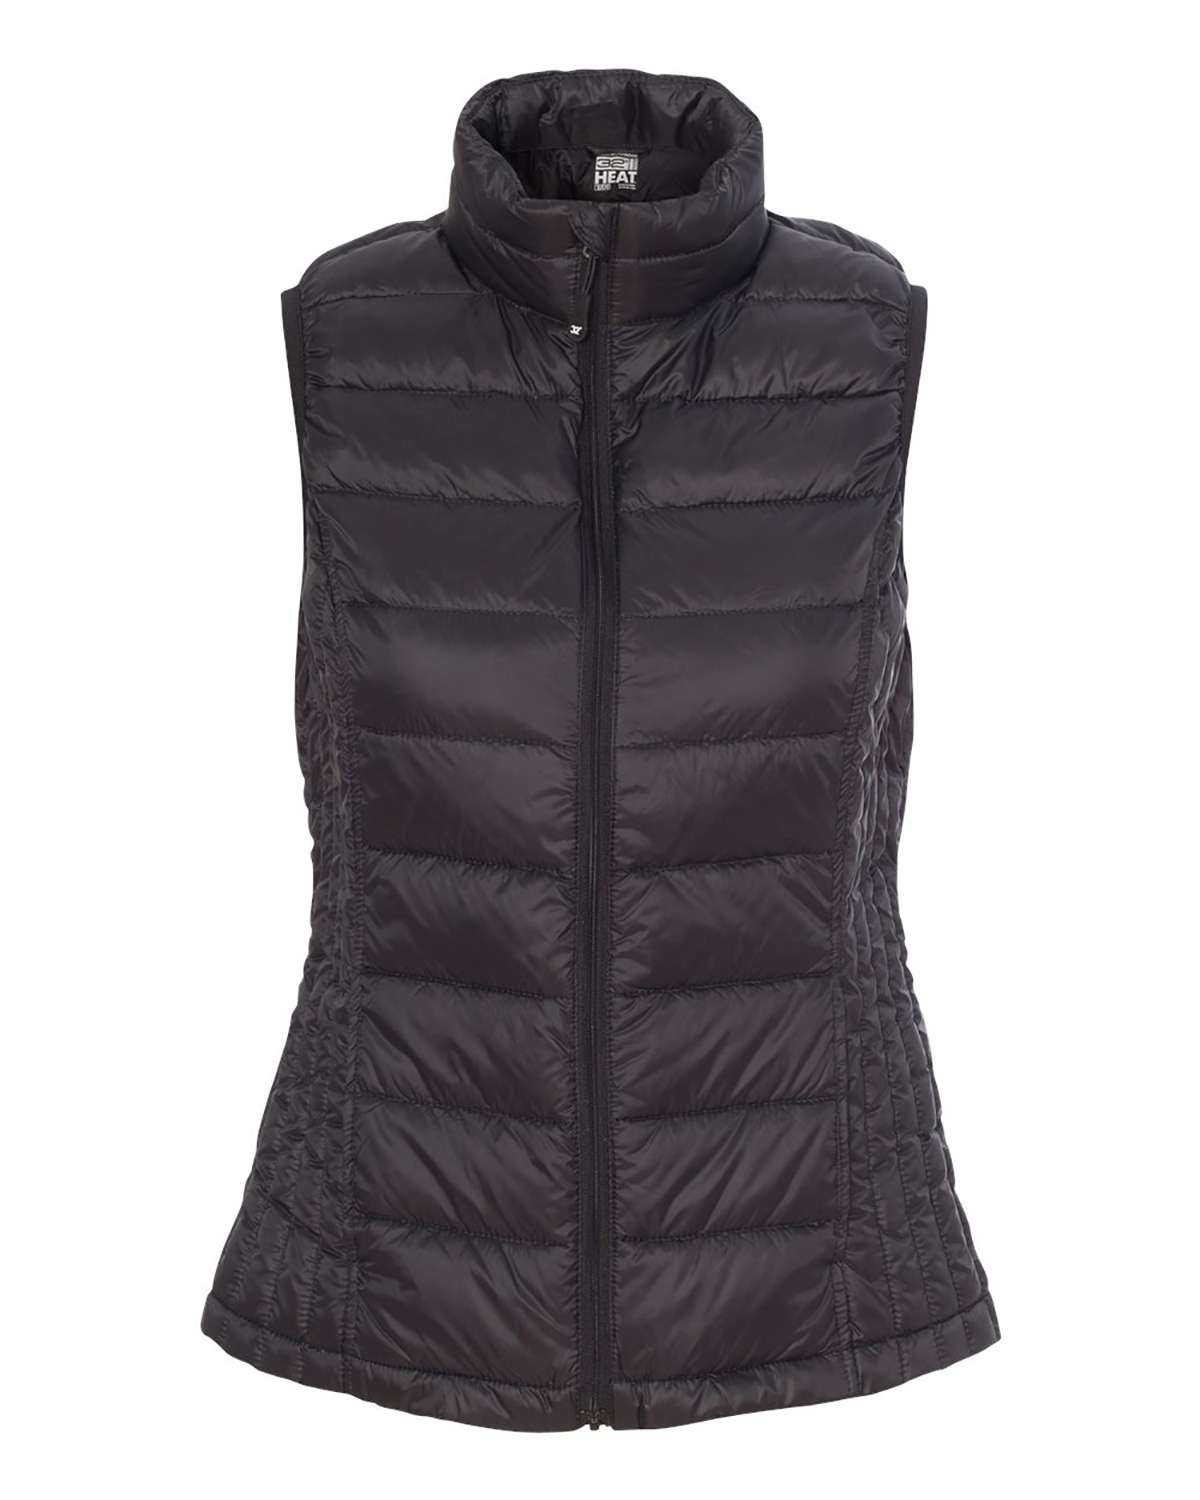 'Weatherproof 16700W 32 Degrees Women's Packable Down Vest'